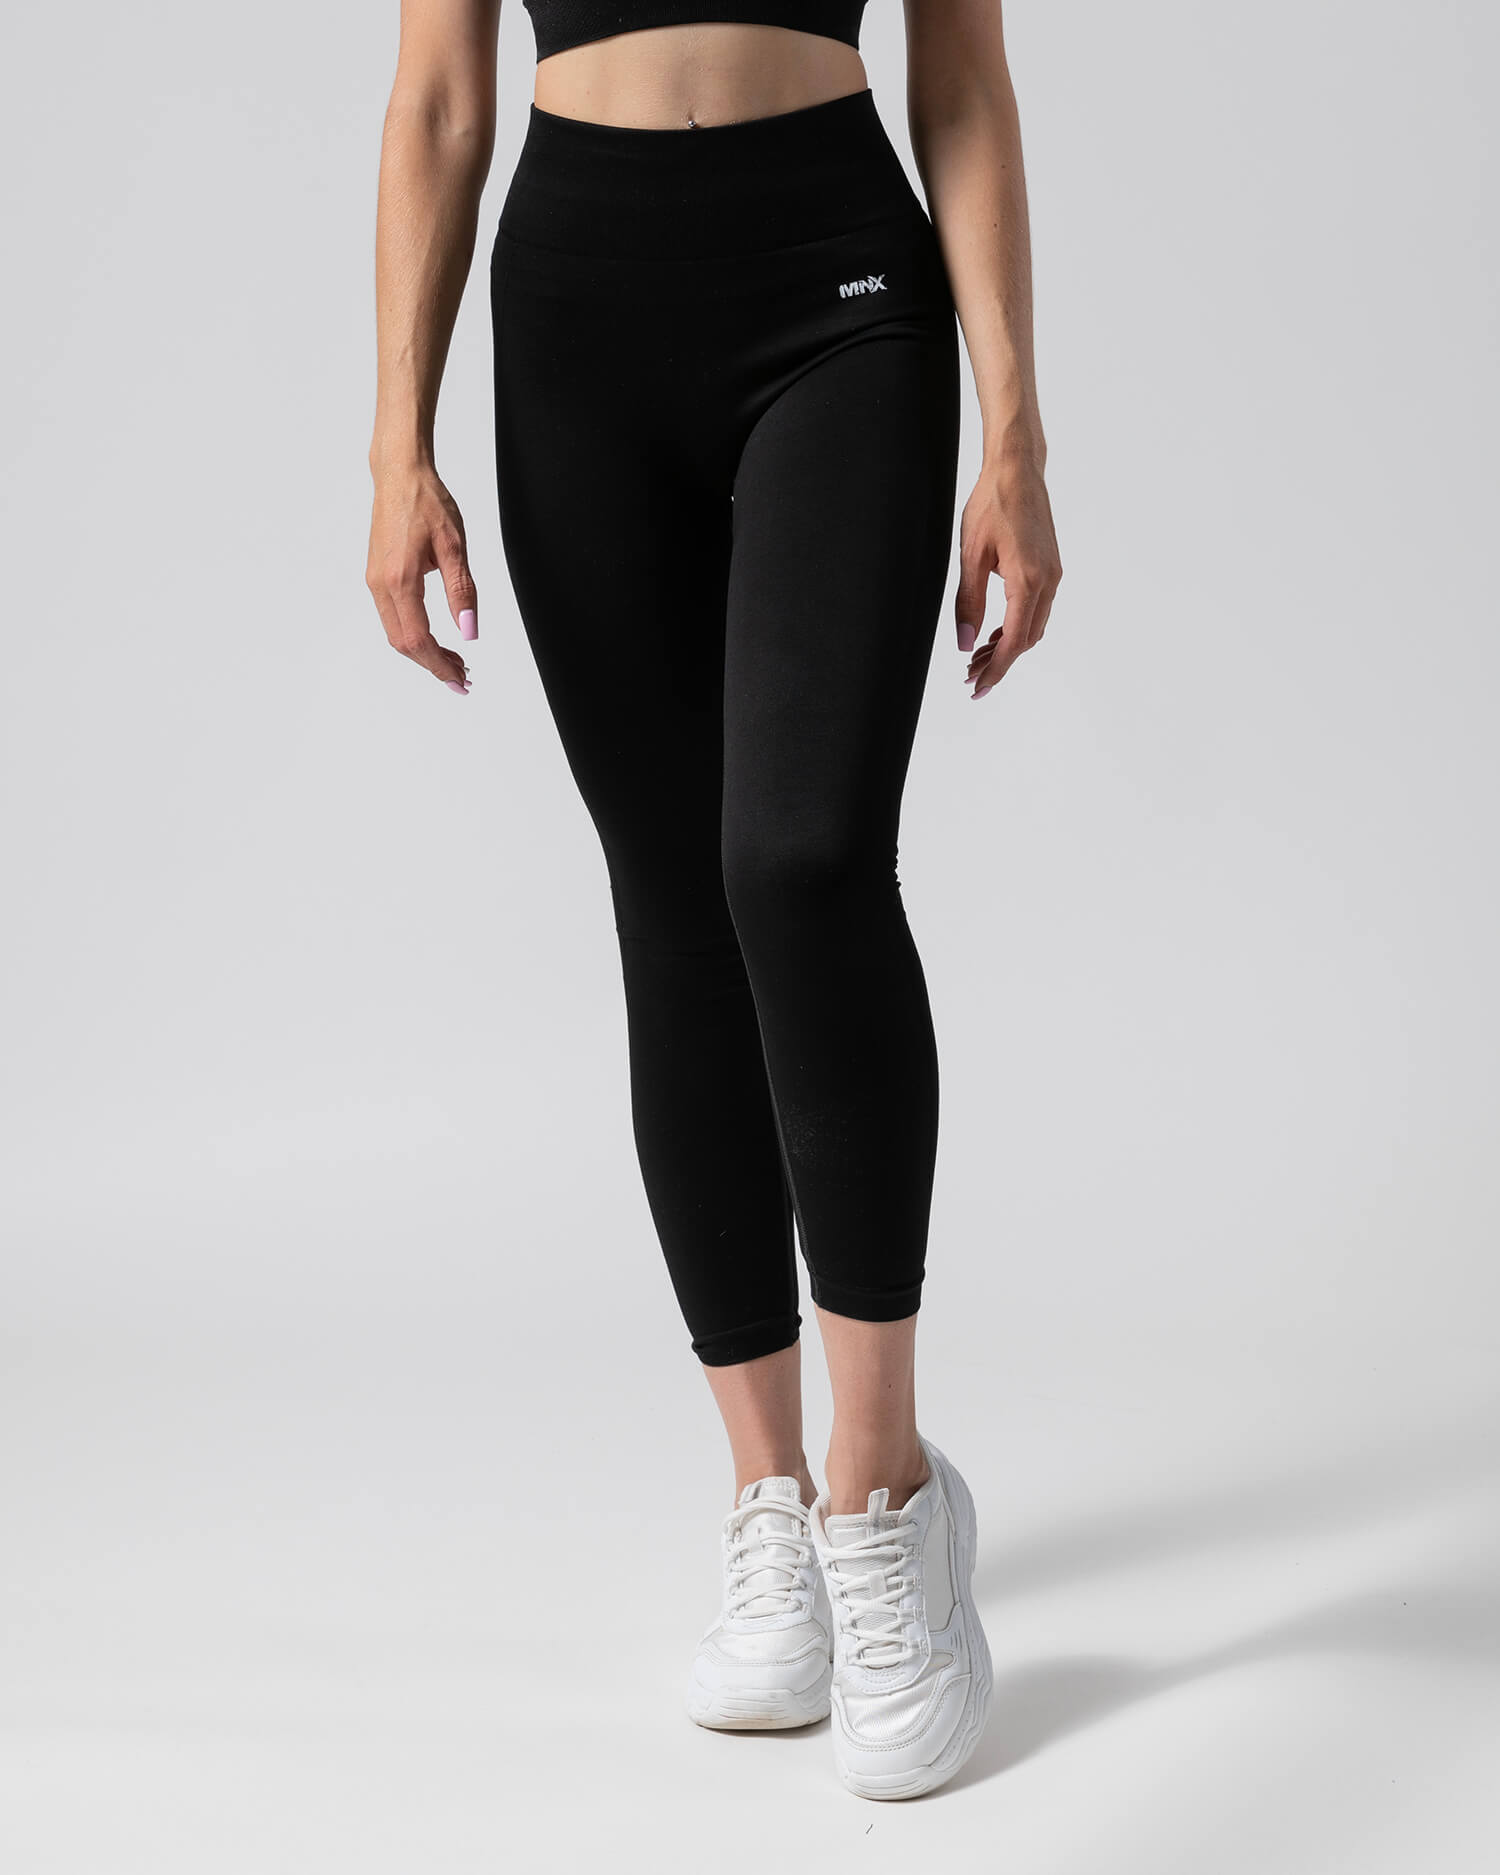 MNX Women's seamless leggings Glam, black - MNX Sportswear